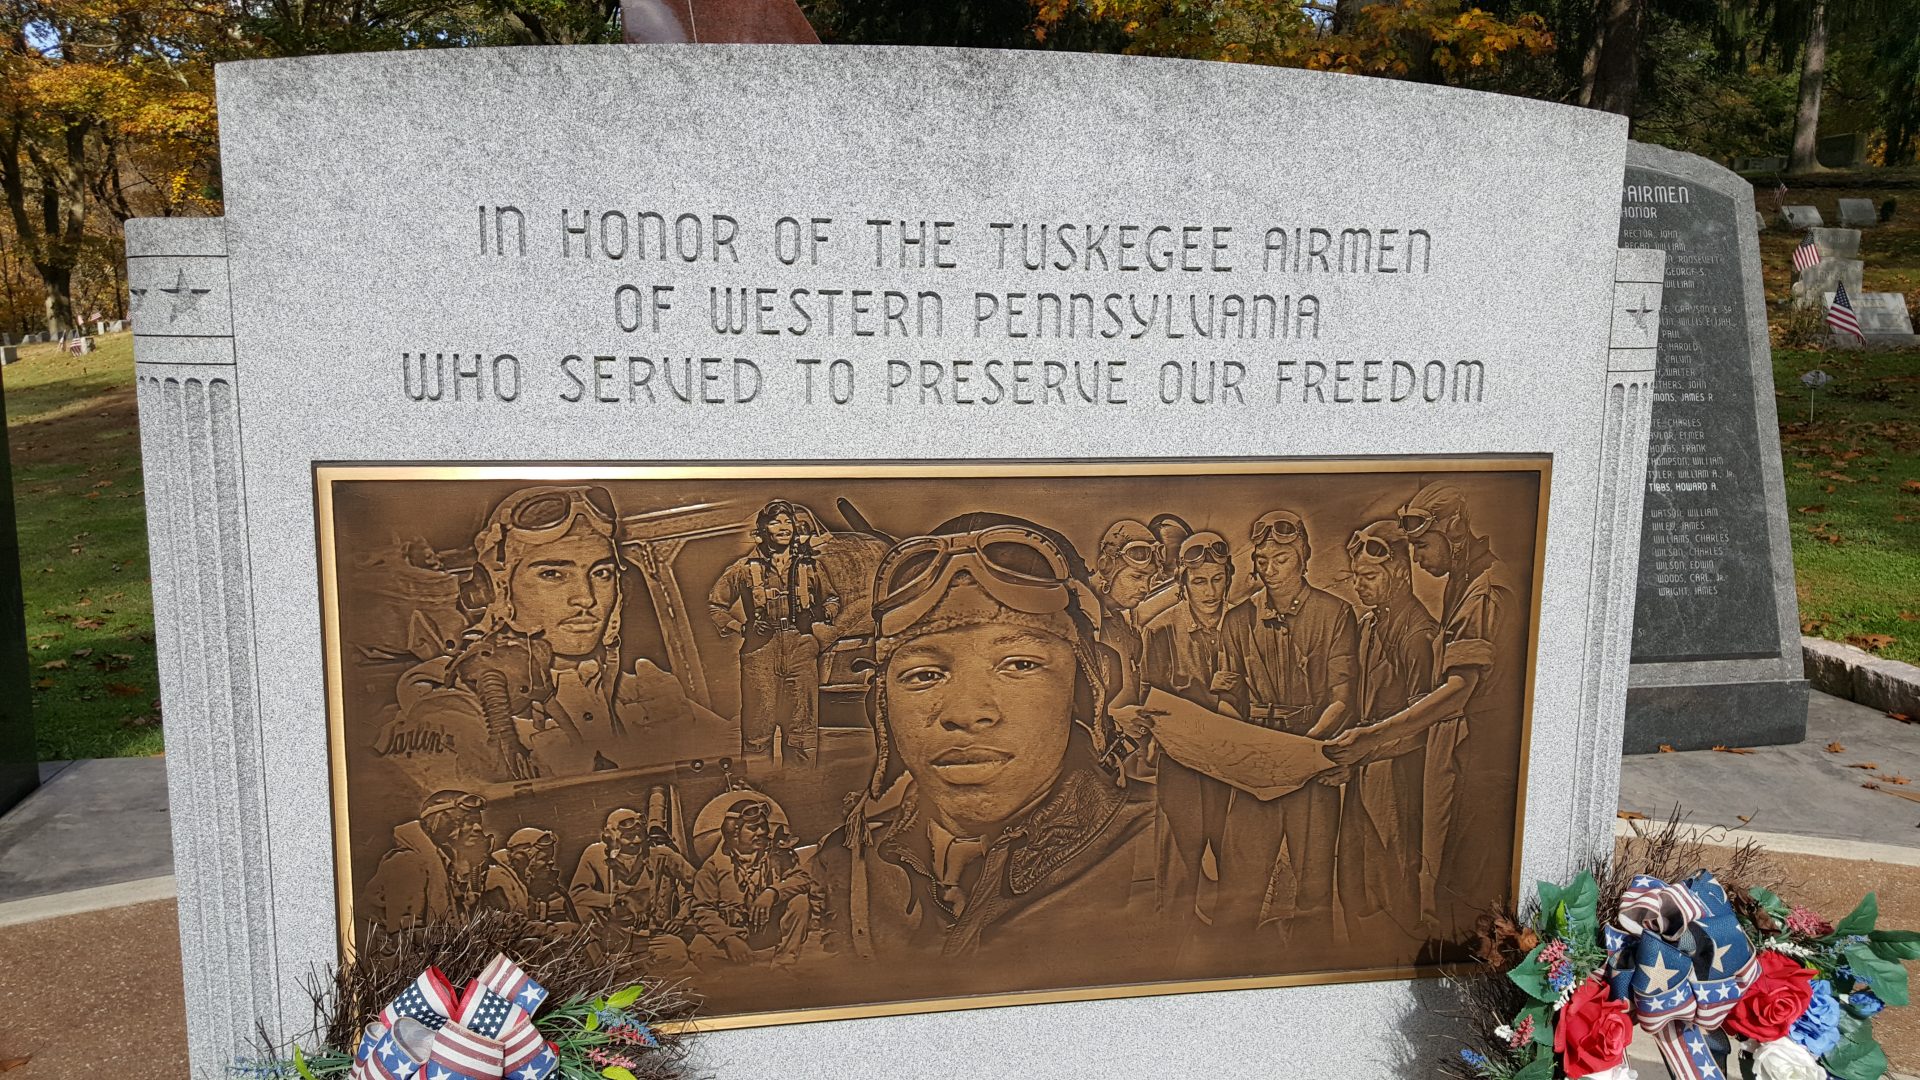 Memorial for Tuskegee Airman of Western Pennsylvania.